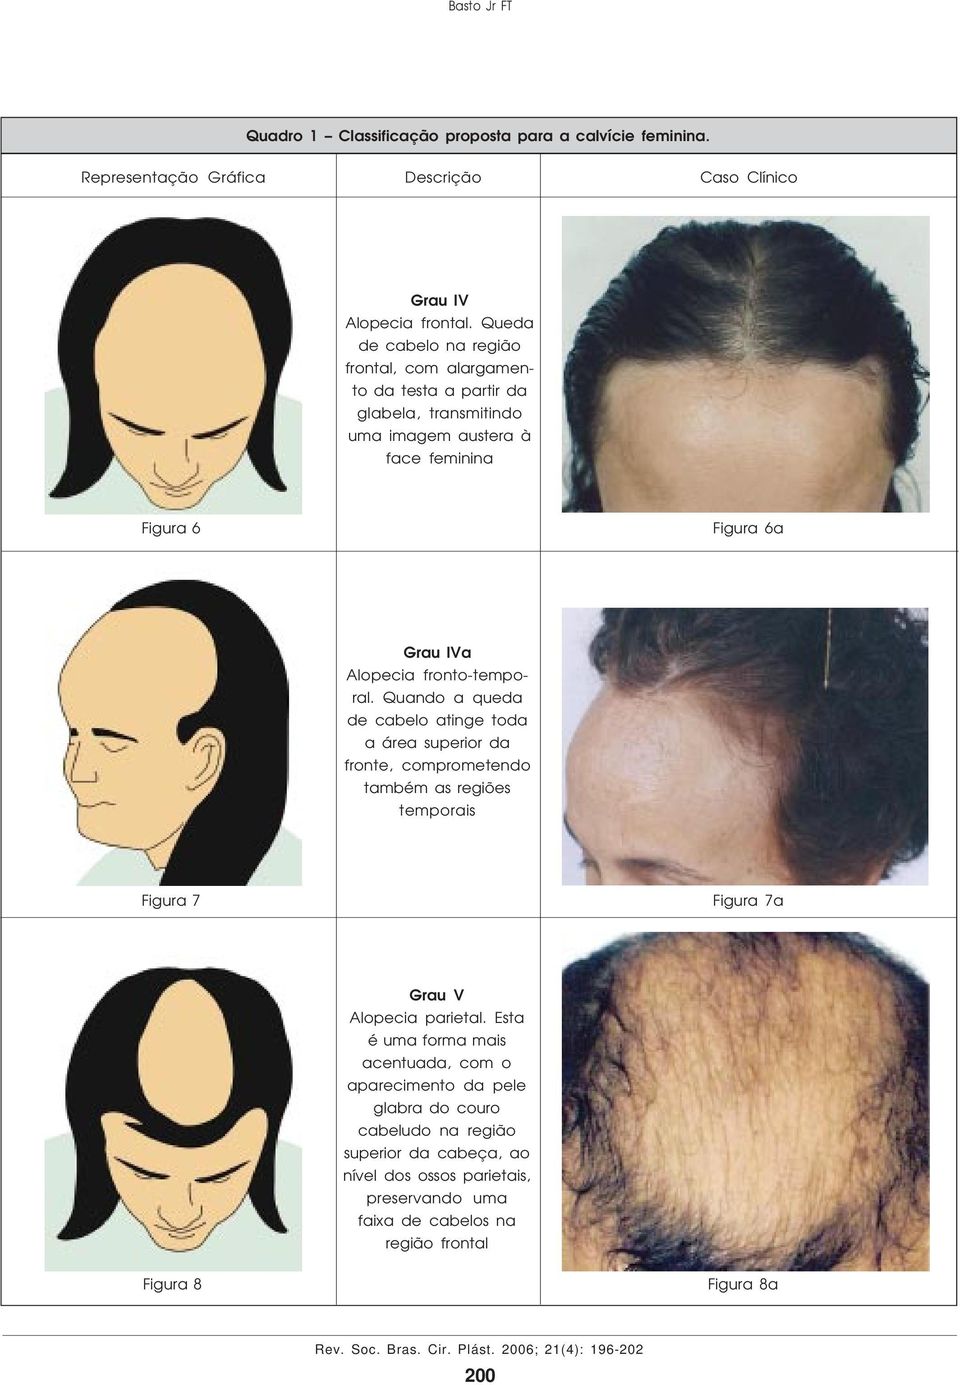 Grau IVa Alopecia fronto-temporal.